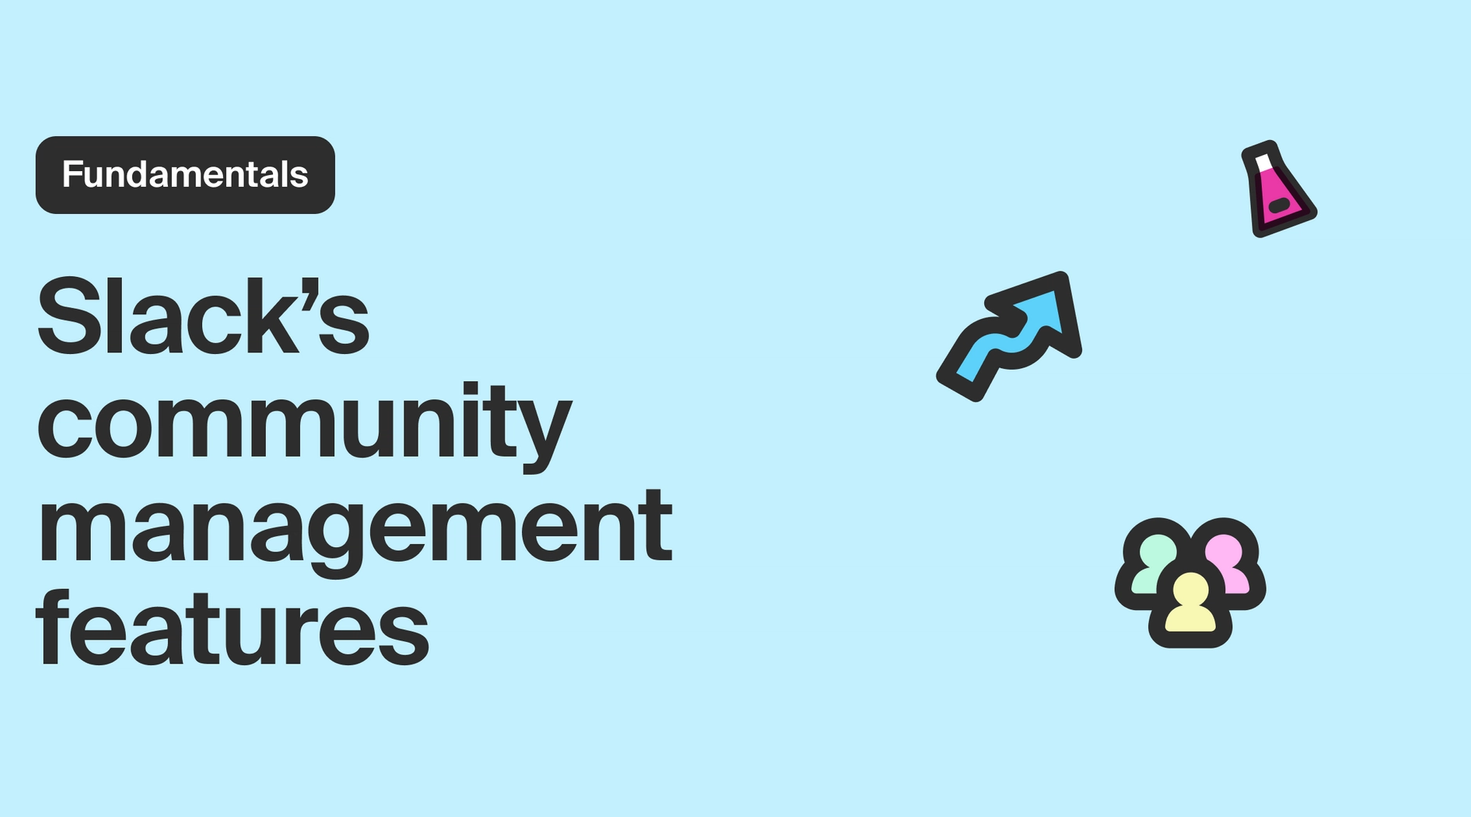 An overview of Slack's community management features